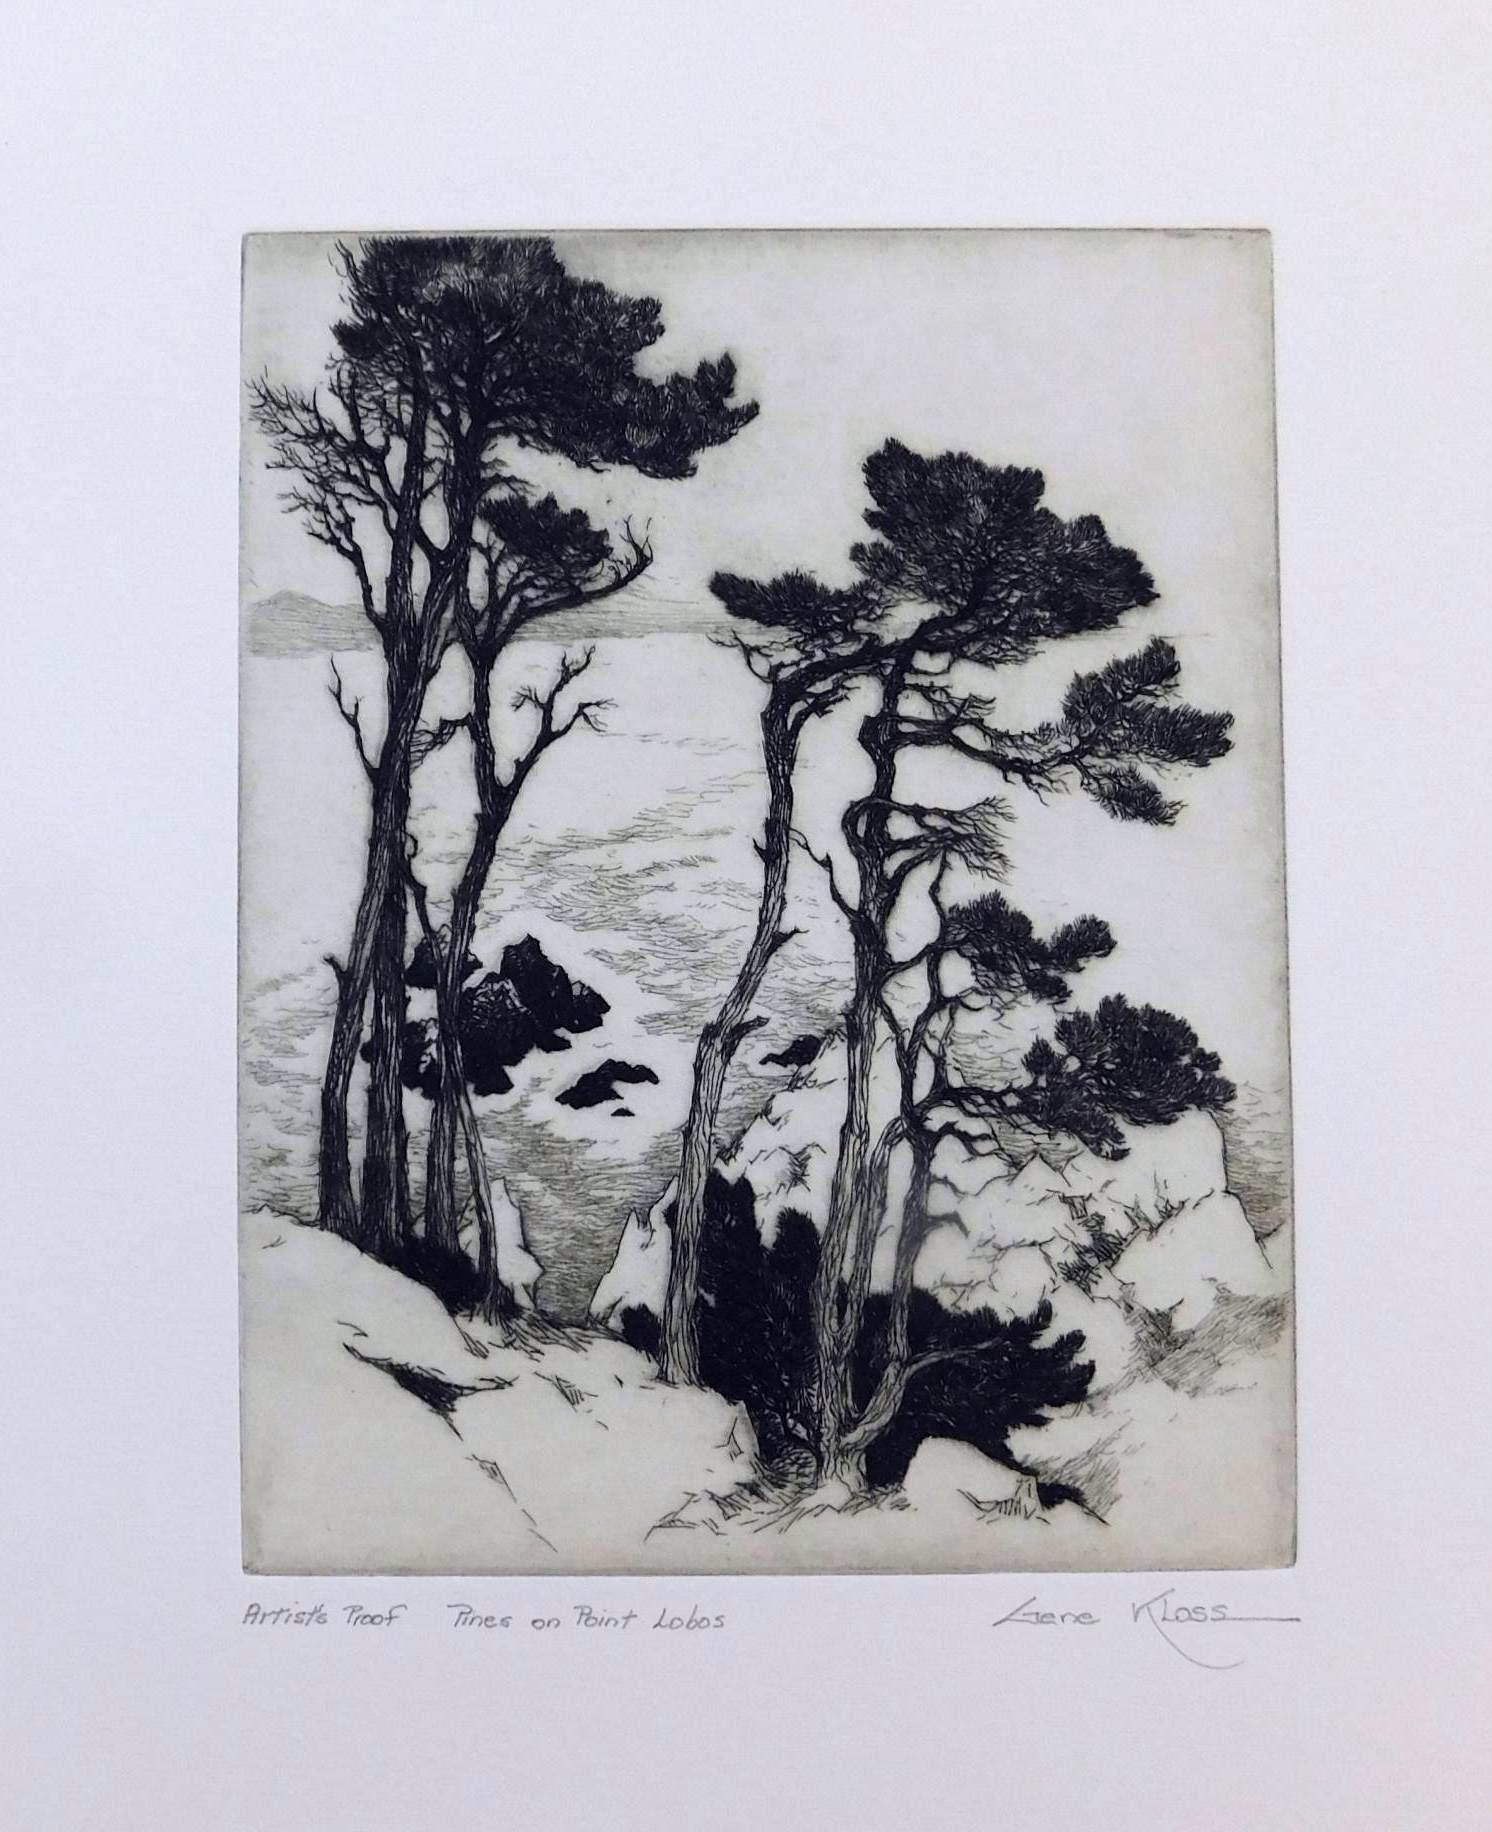 Gene Kloss Original Etching, 1938 - "Pines at Point Lobos"  